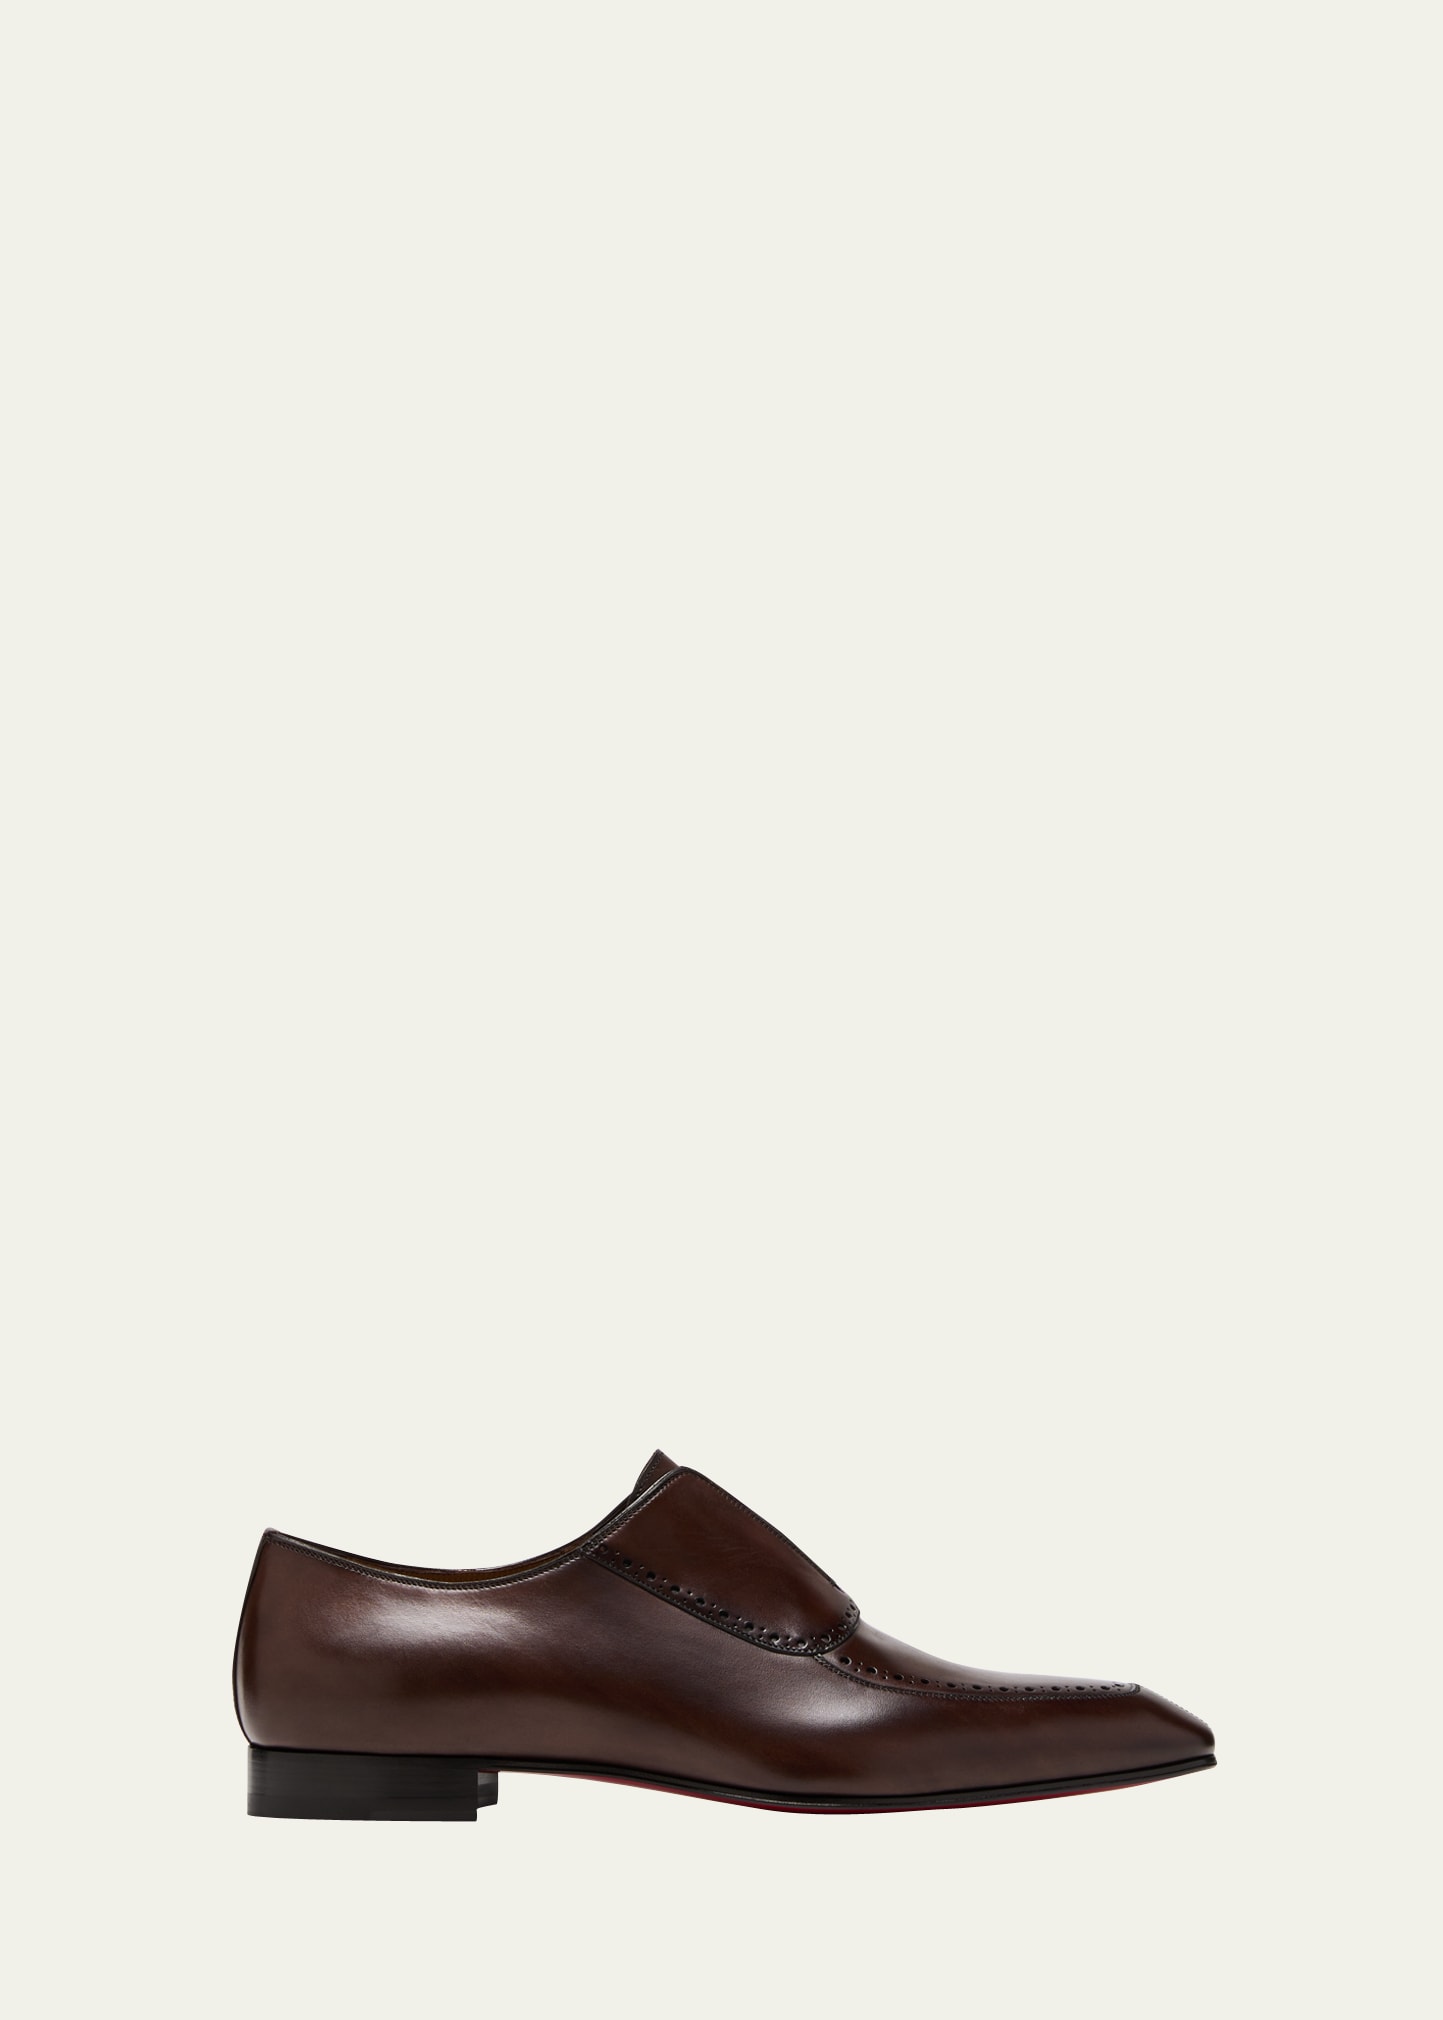 Louboutin shoes men - Gem